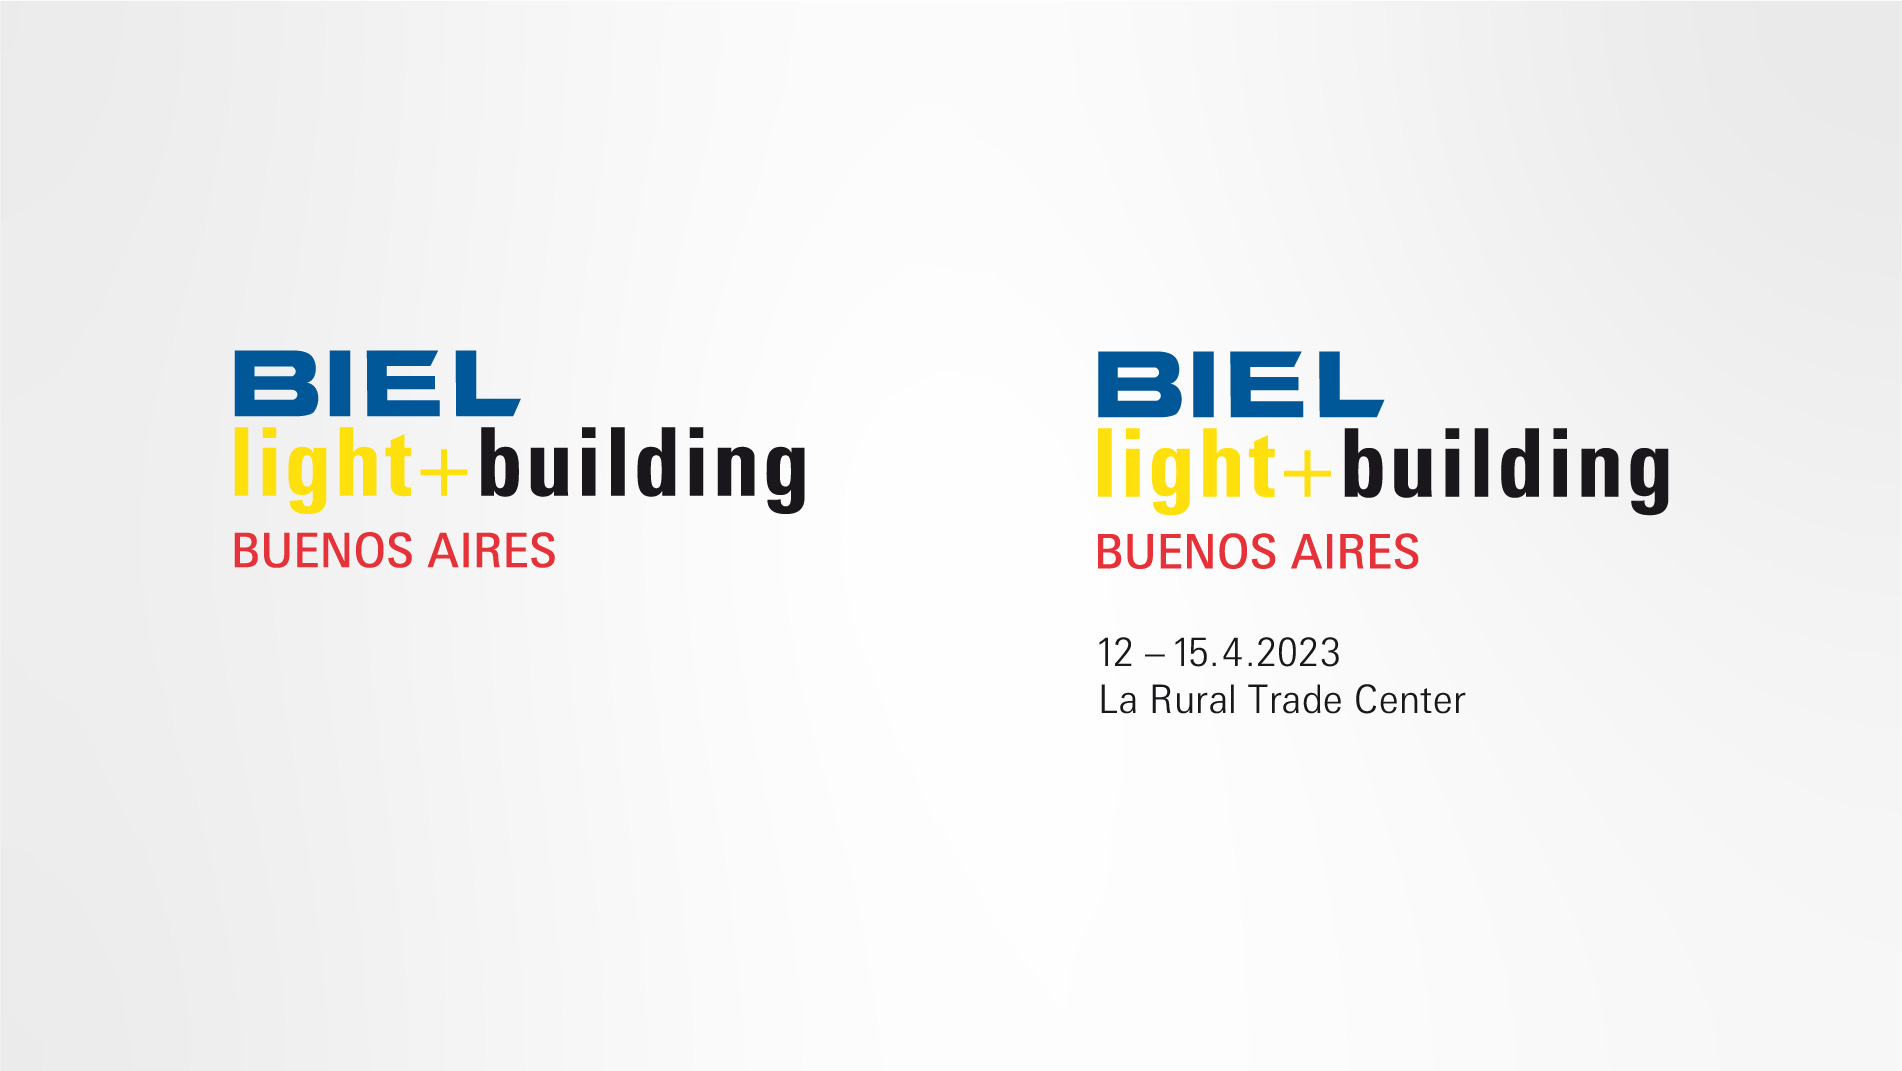 BIEL light + building Buenos Aires: Logos